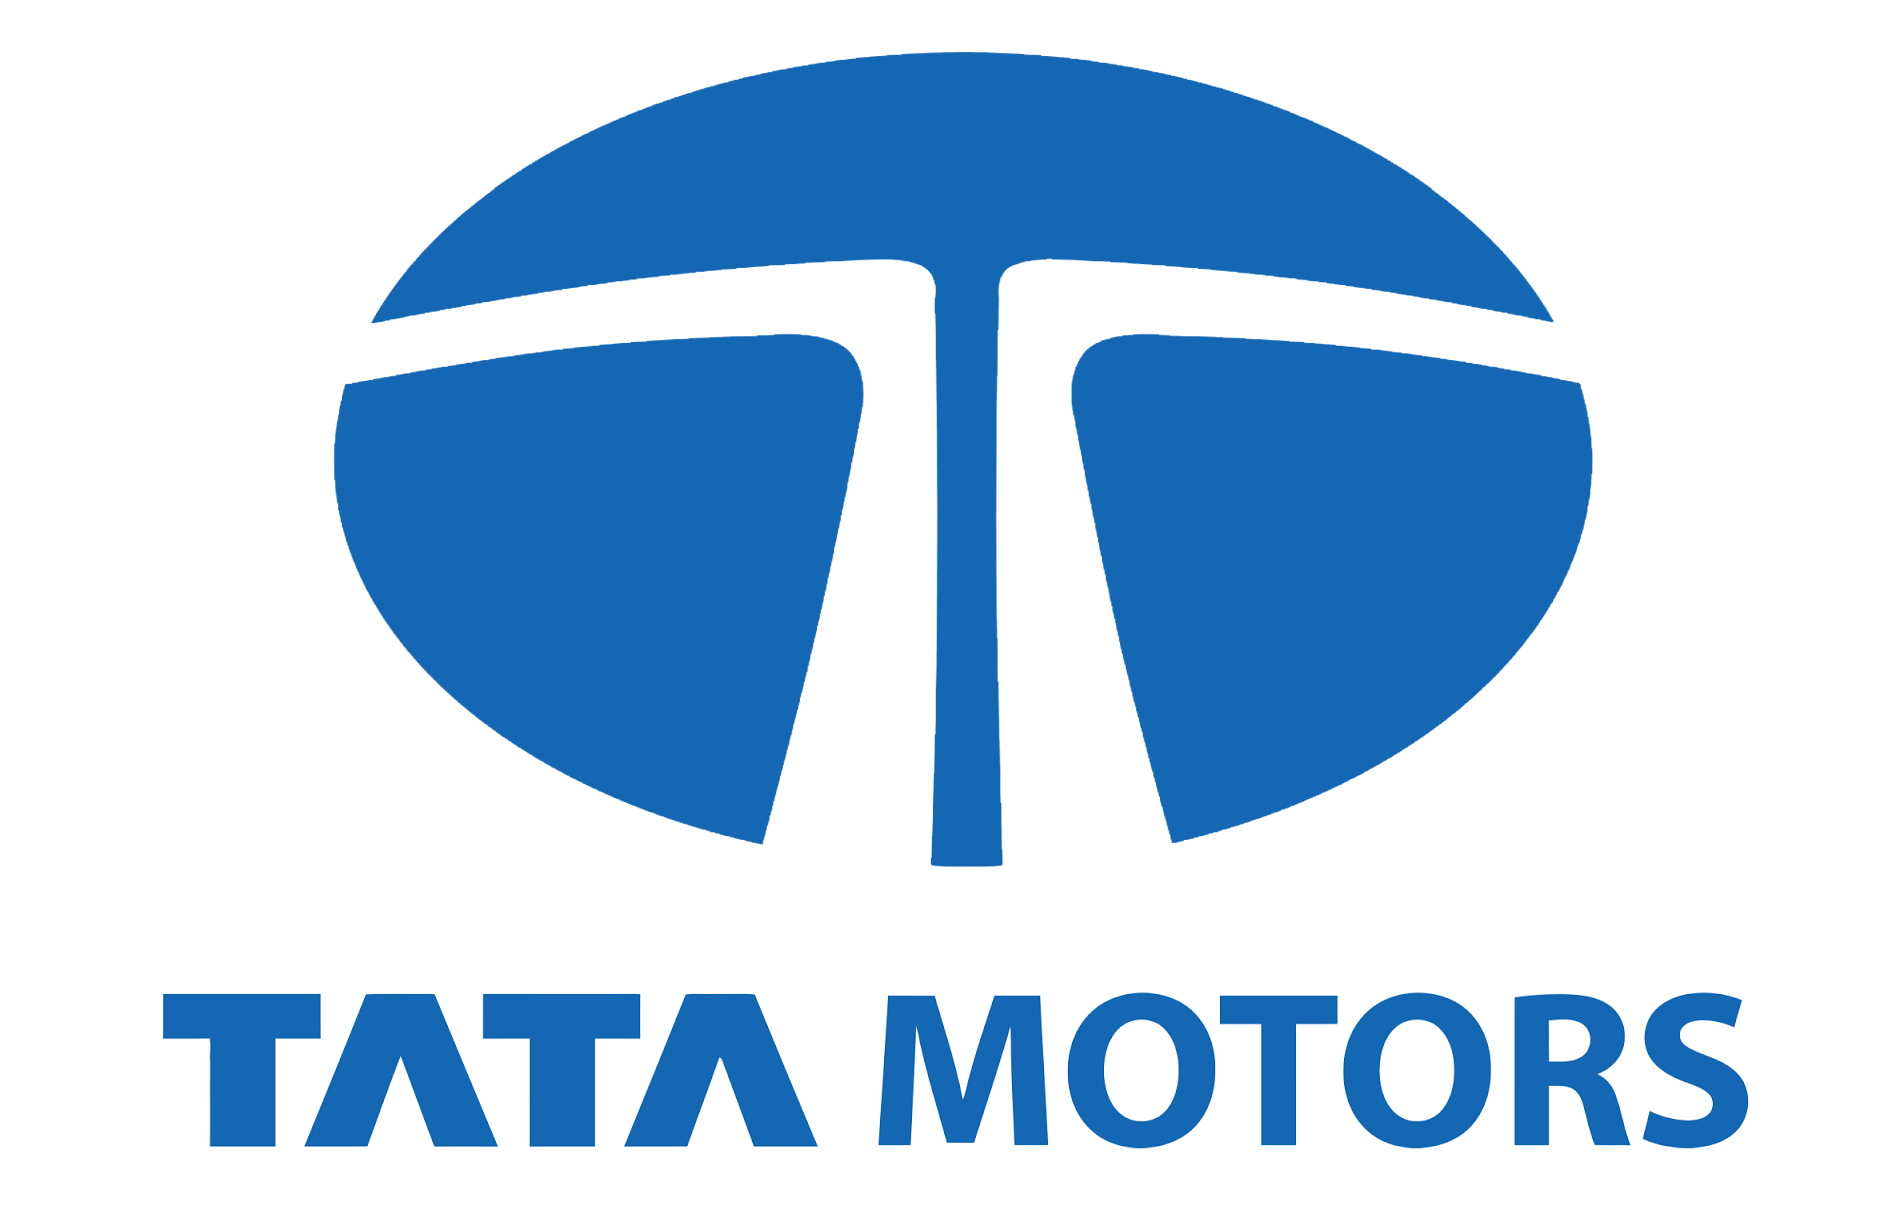 Tata Motors Cars Showroom - Schakralaya Motors Pvt Ltd Logo